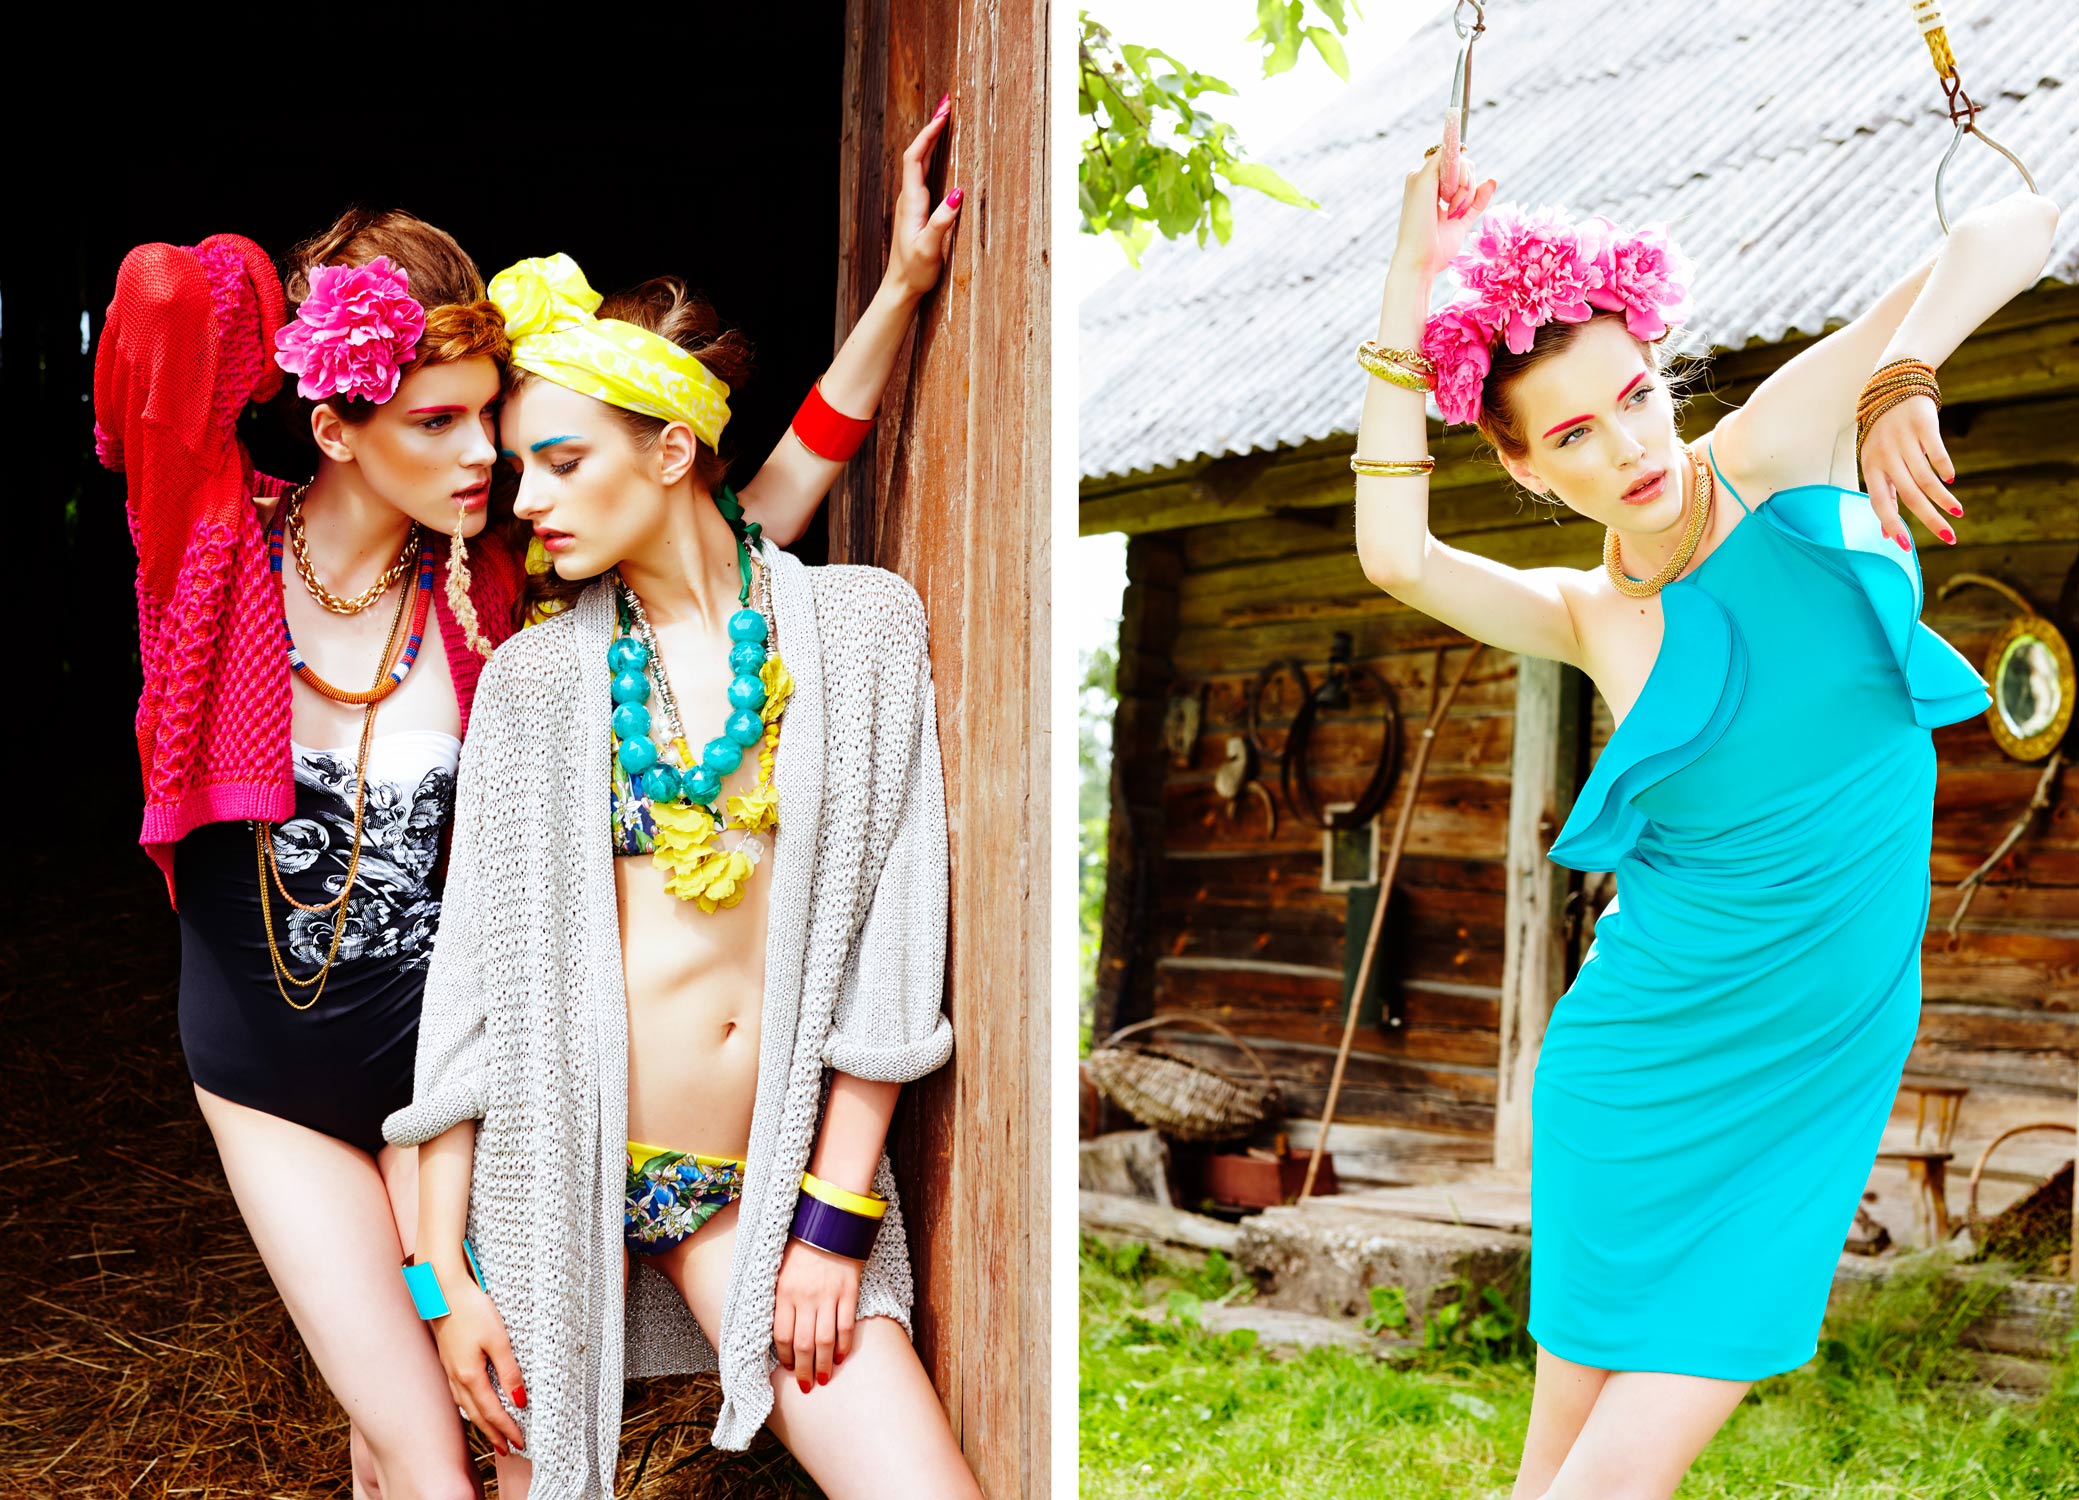 <p>Laura Jaraminaitė<br />
Beachwear by La perla, knitwear by Escada sport, dress by Gucci<br />
Kotryna Sinkevičiūtė<br />
Bikinis by Dolce & Gabbana, knitwear by Marina Rinaldi<br />
Velvet magazine<br />
UAE<br />
2013</p>
